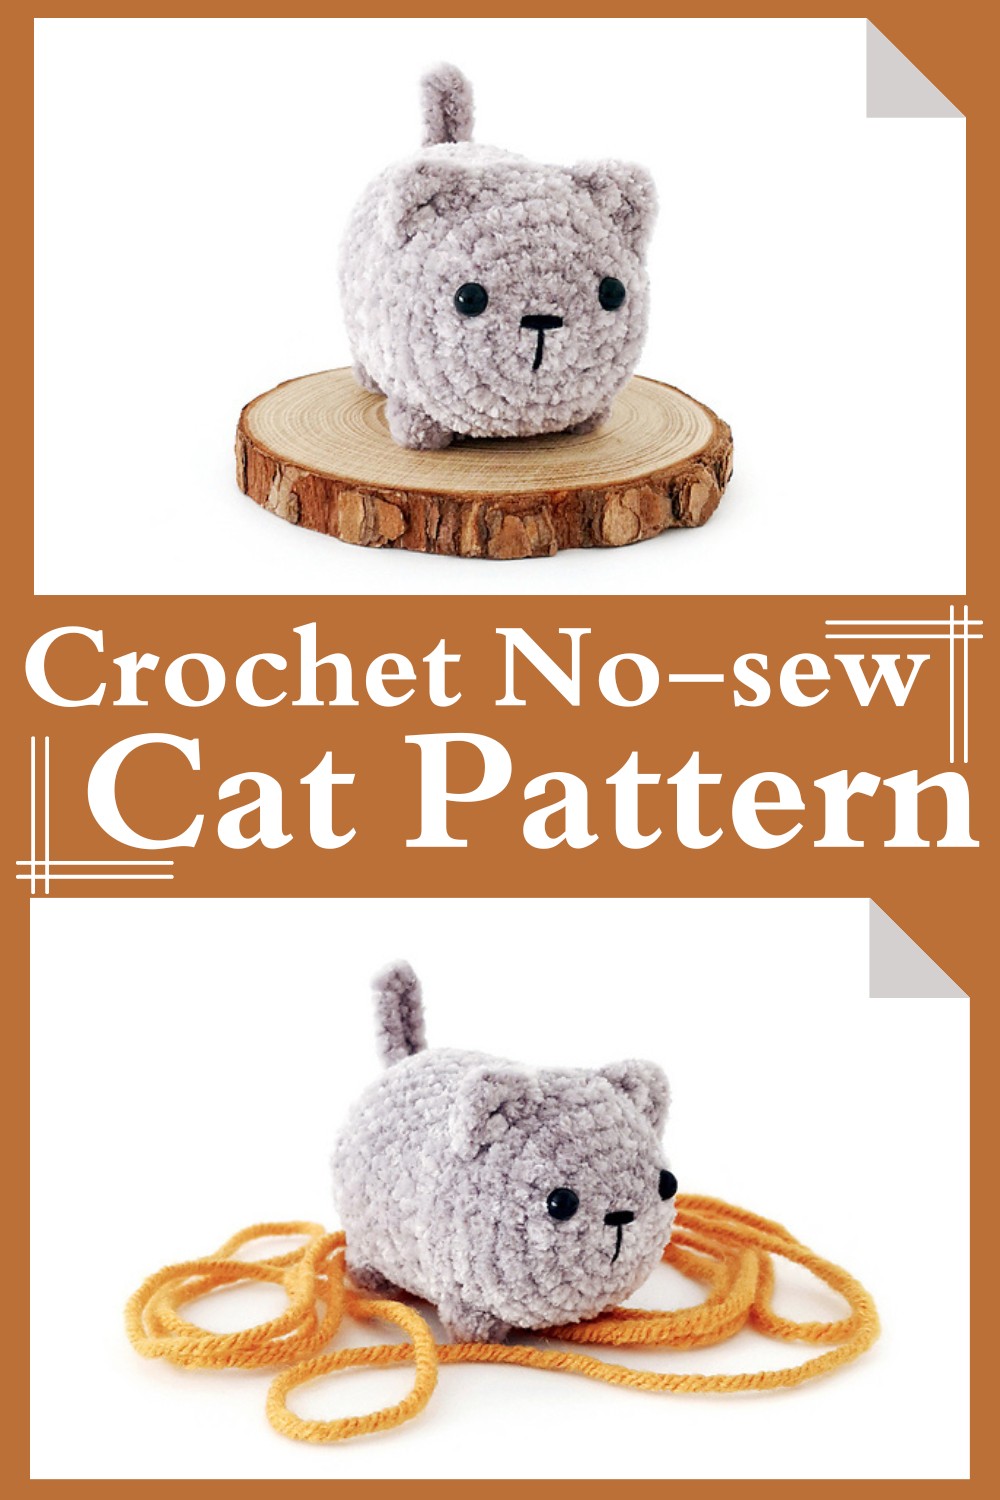 Crochet No-sew Cat Pattern